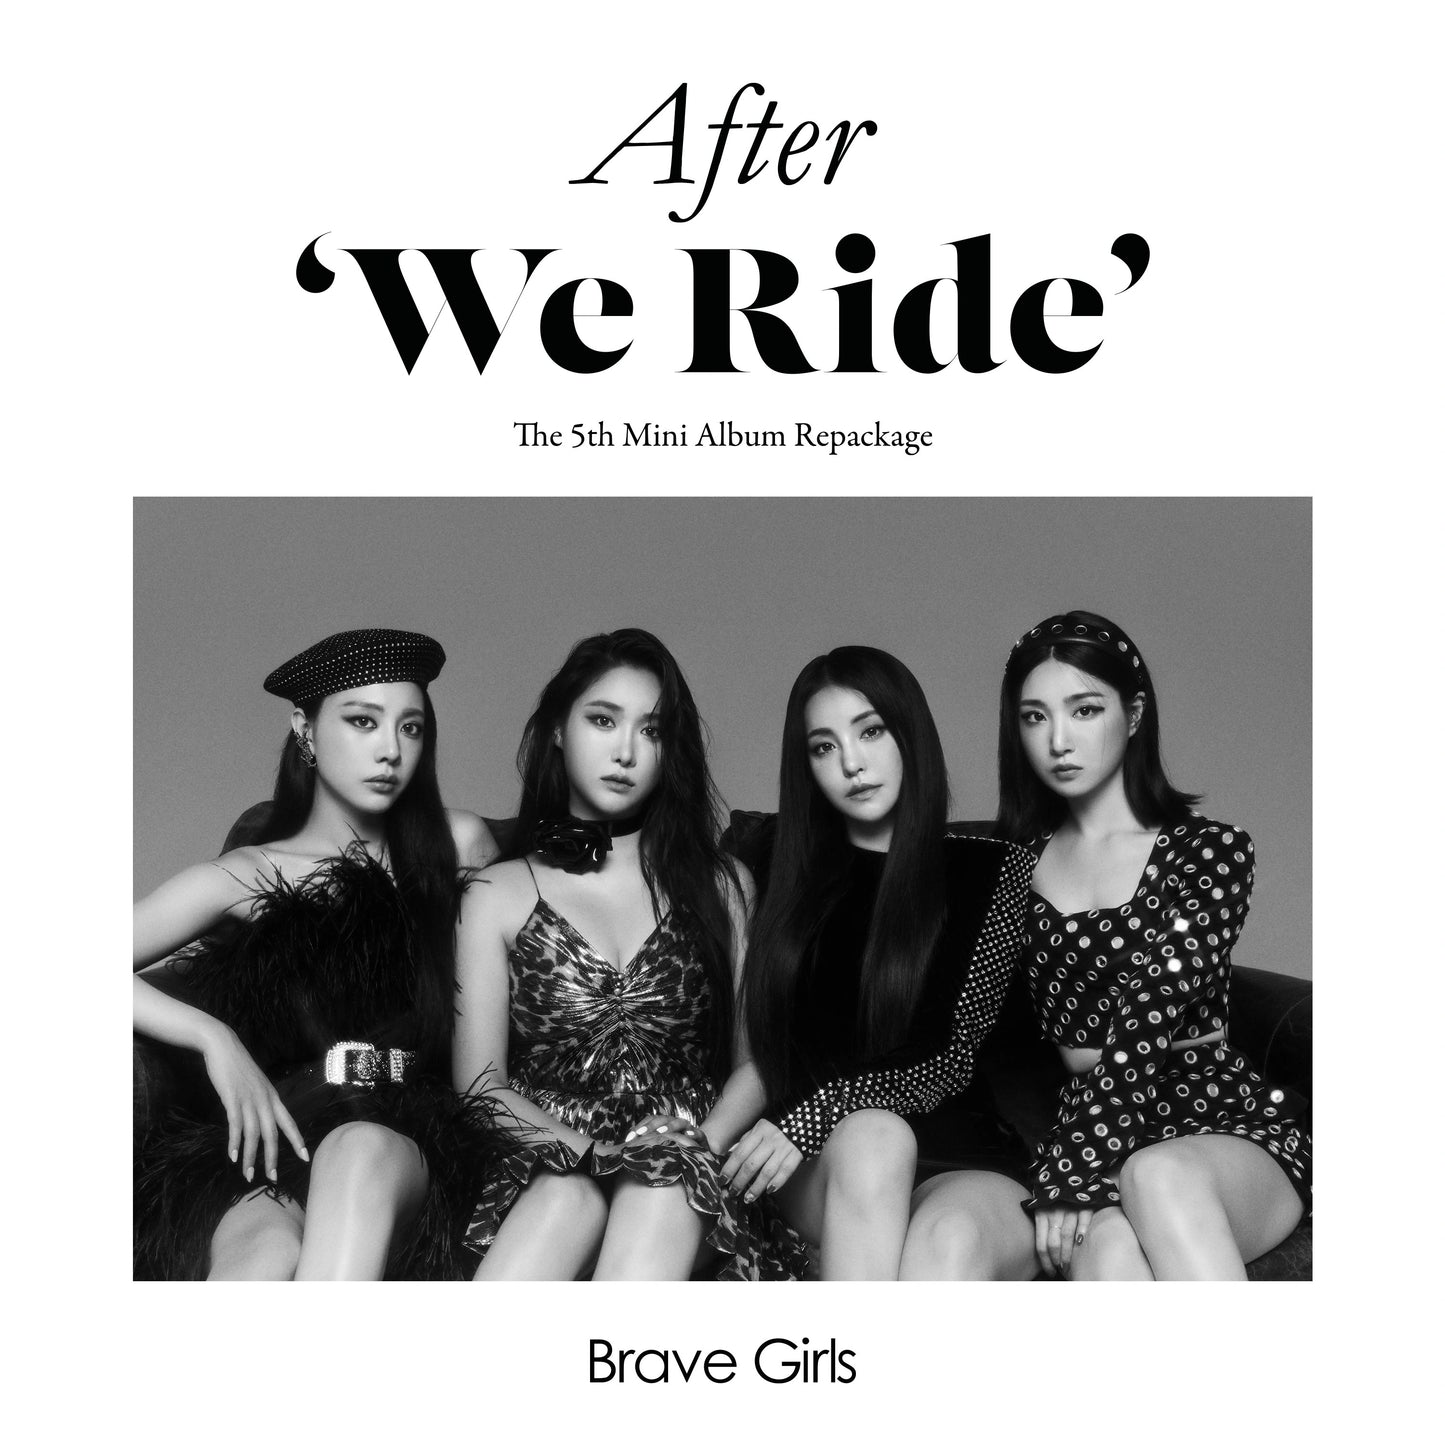 Brave Girls - After "We Ride"